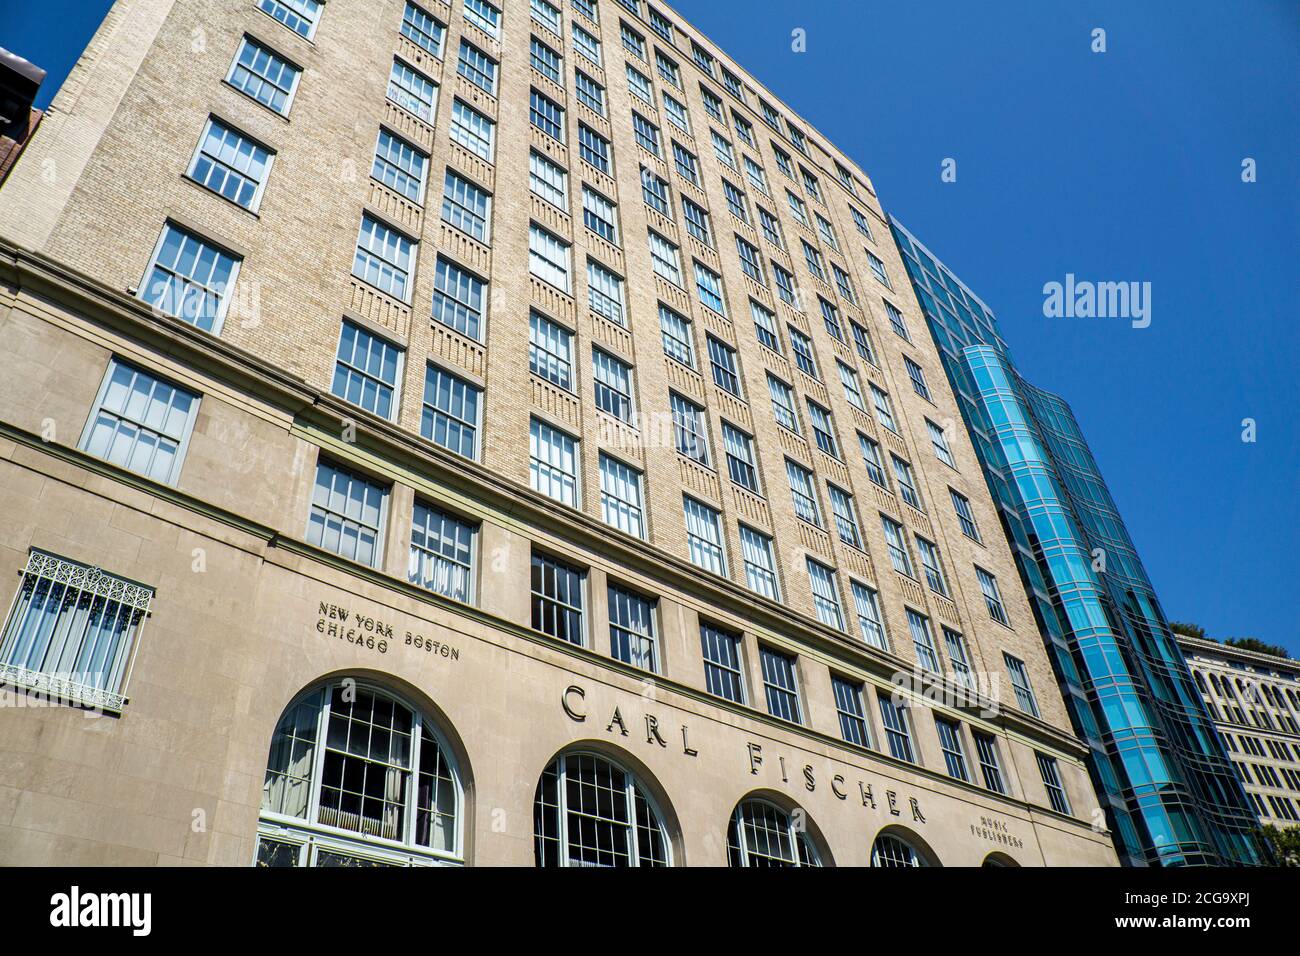 Carl Fischer Building, Exterior Façade, Low Angle View, 62 Cooper Square, New York City, New York, USA Stock Photo